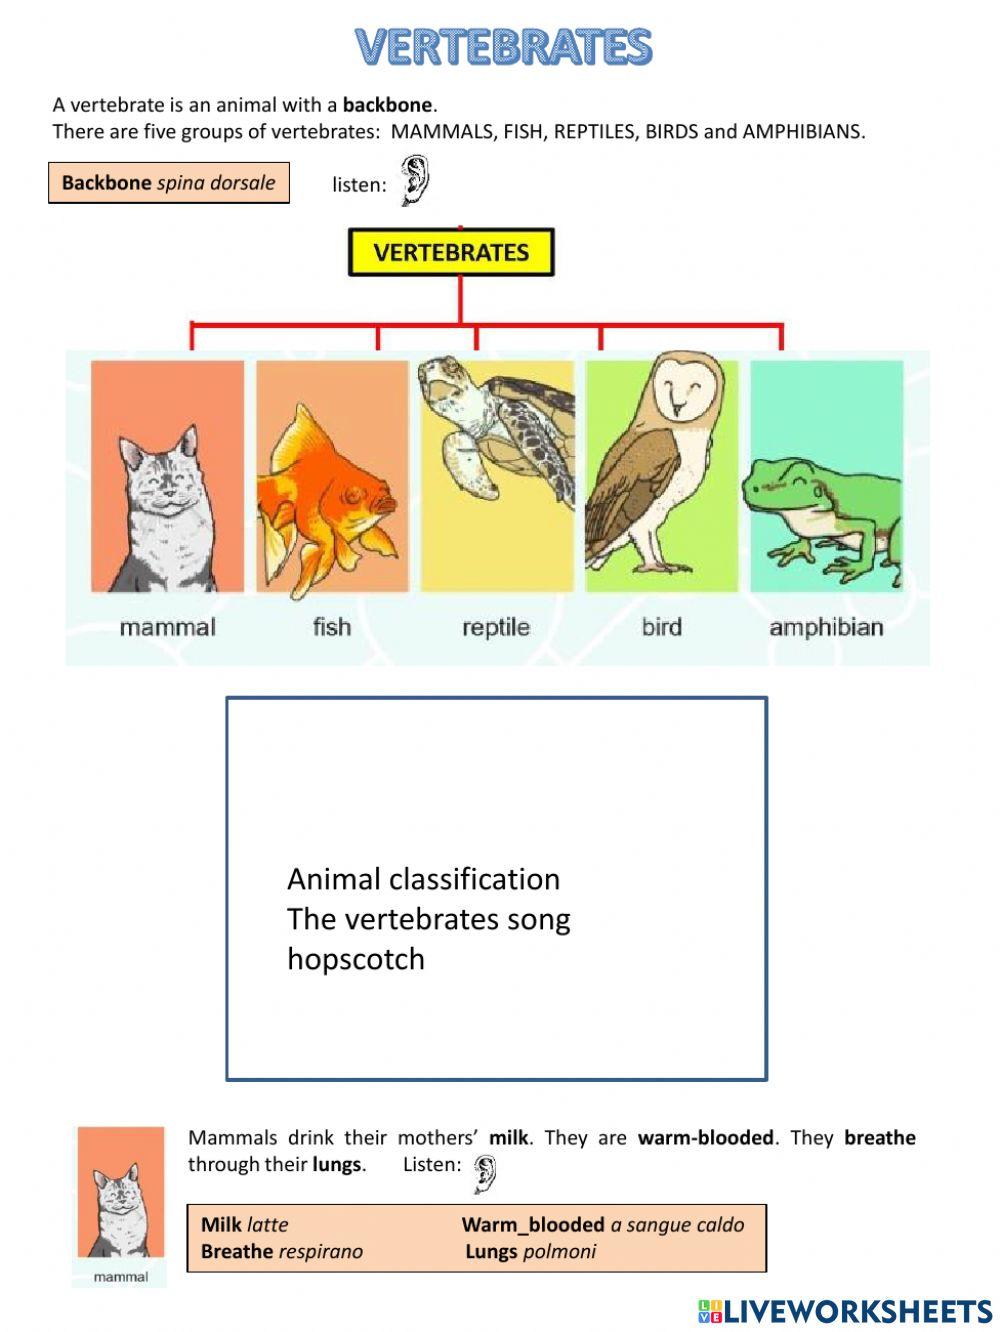 The vertebrates